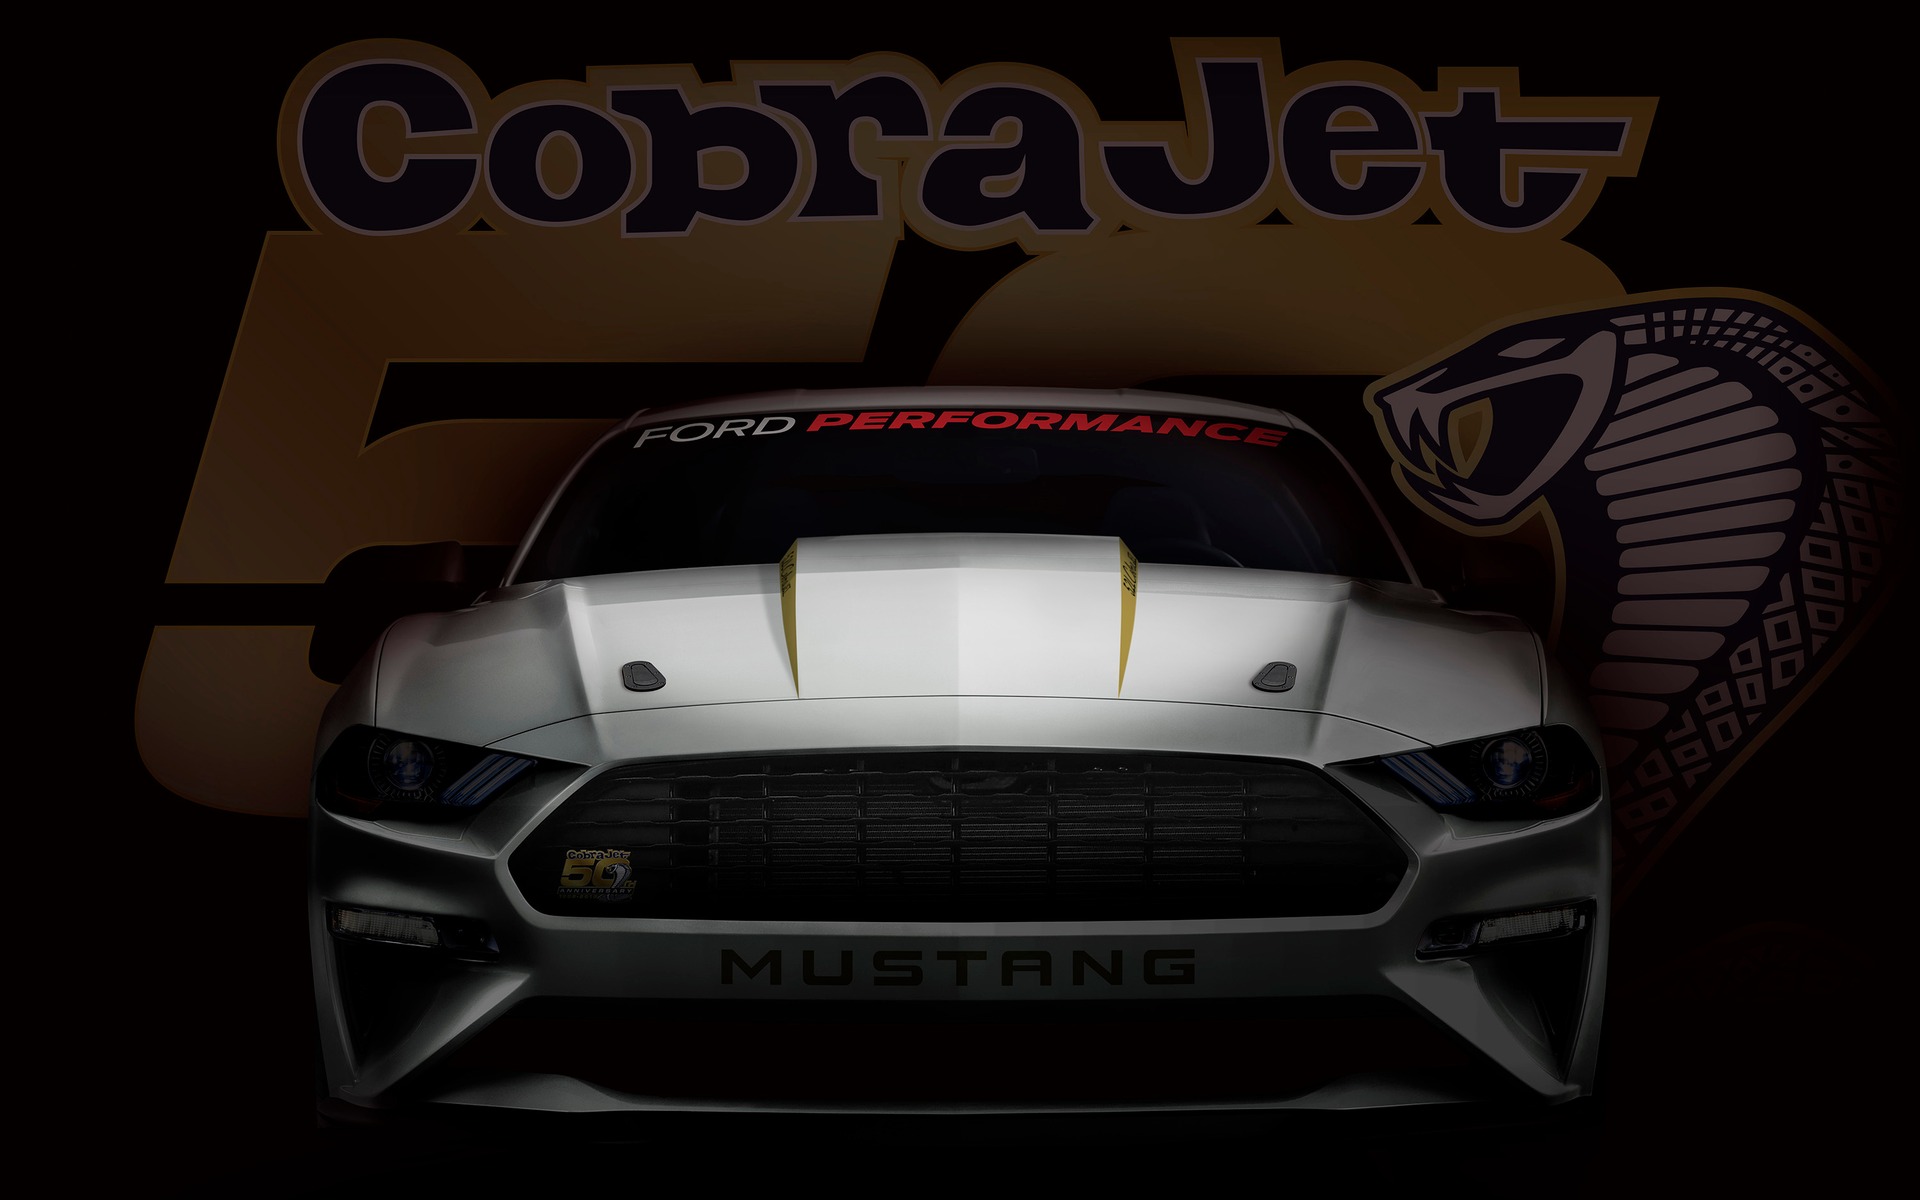 Ford Mustang Cobra Jet 2018